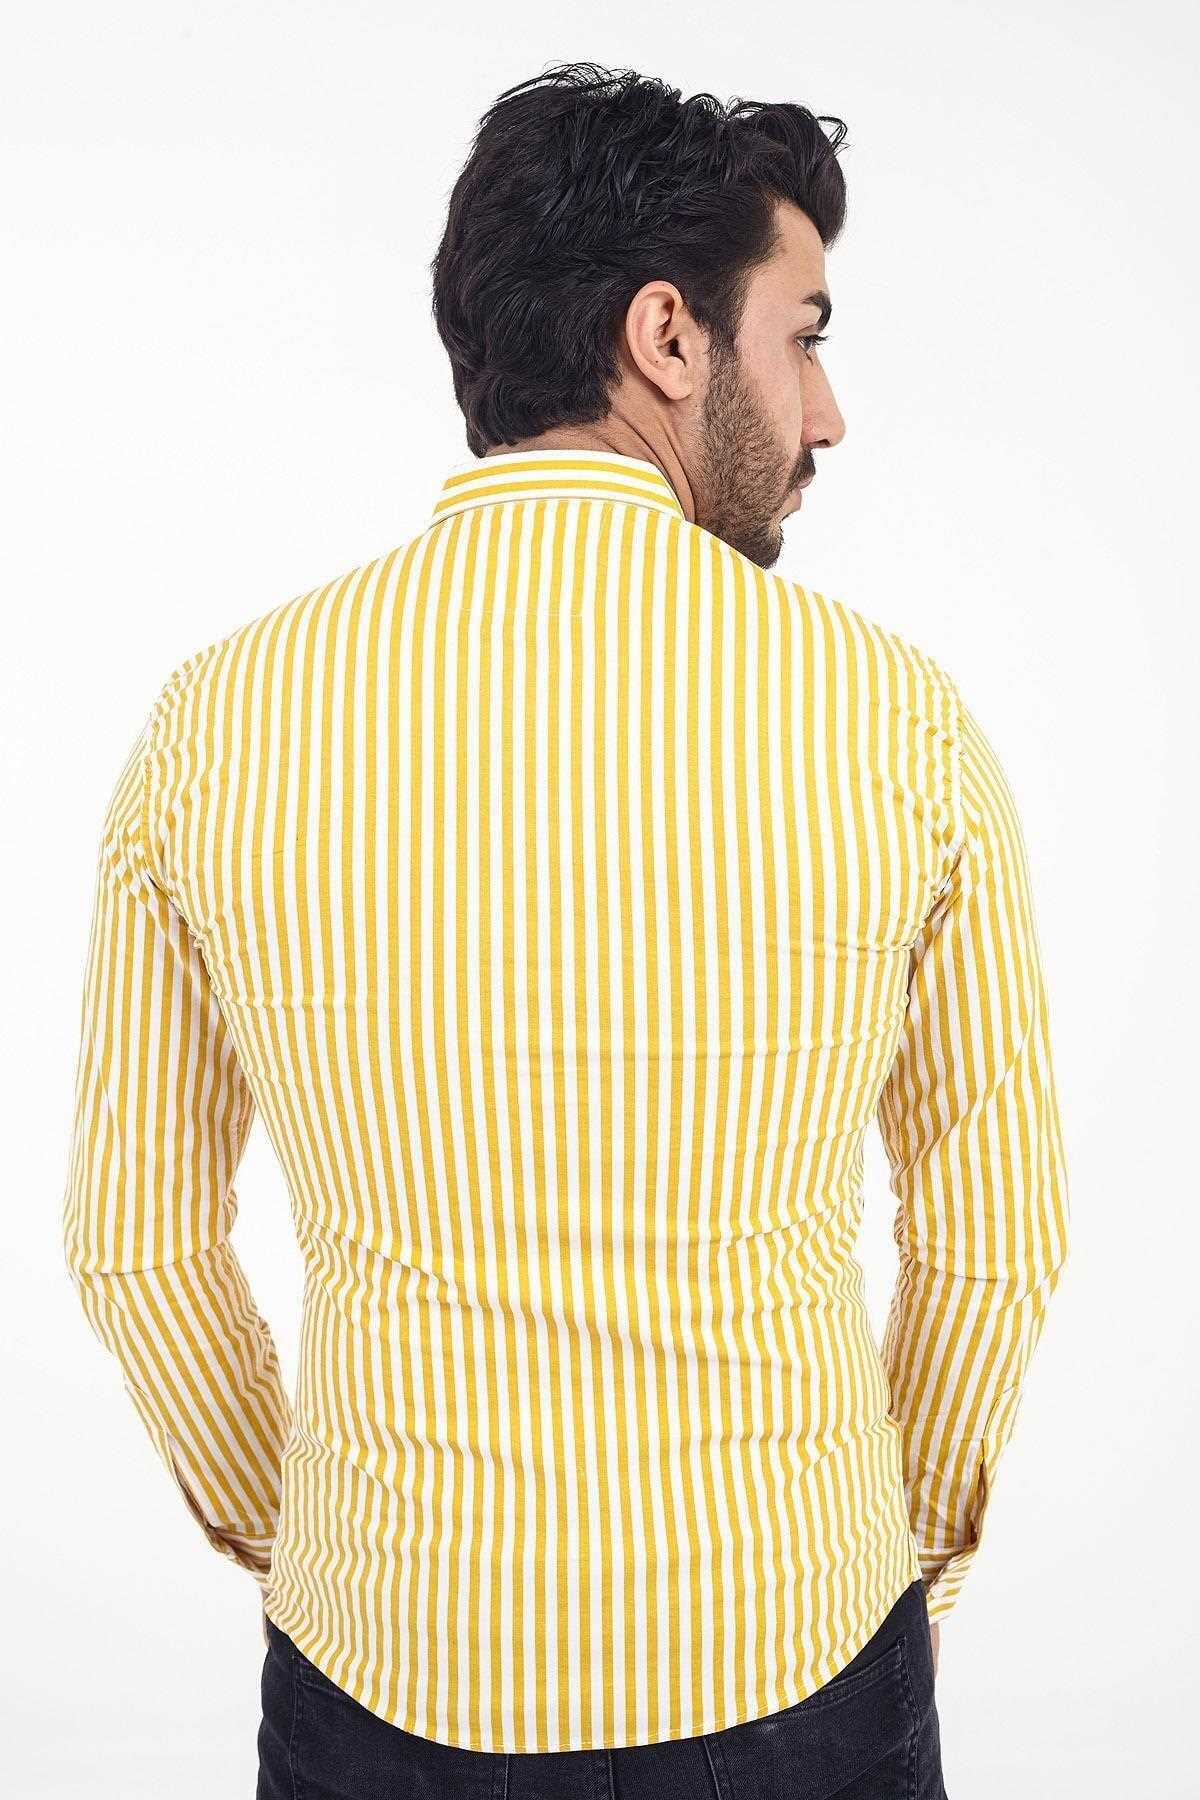 پیراهن 2021 مدل جدید برند اکسید رنگ زرد کد ty36598131